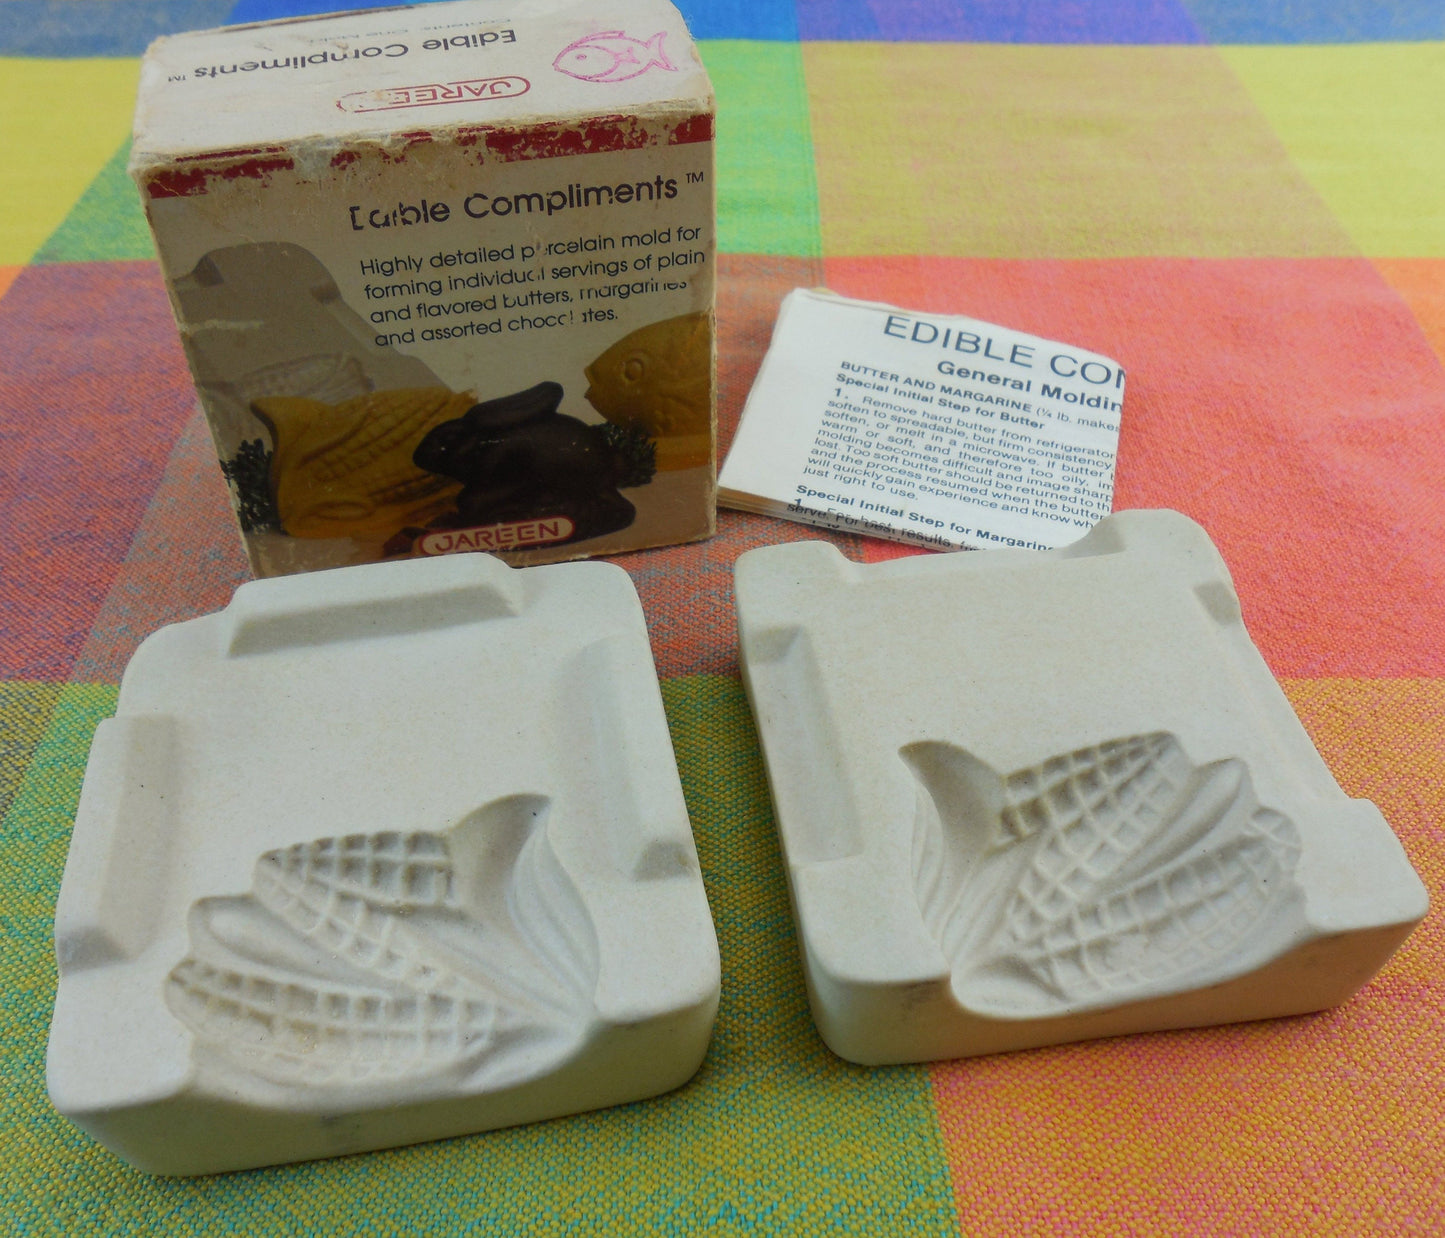 Jareen Edible Compliments Boxed Porcelain Mold Butter Chocolate - Corn Cob - Vintage 1980